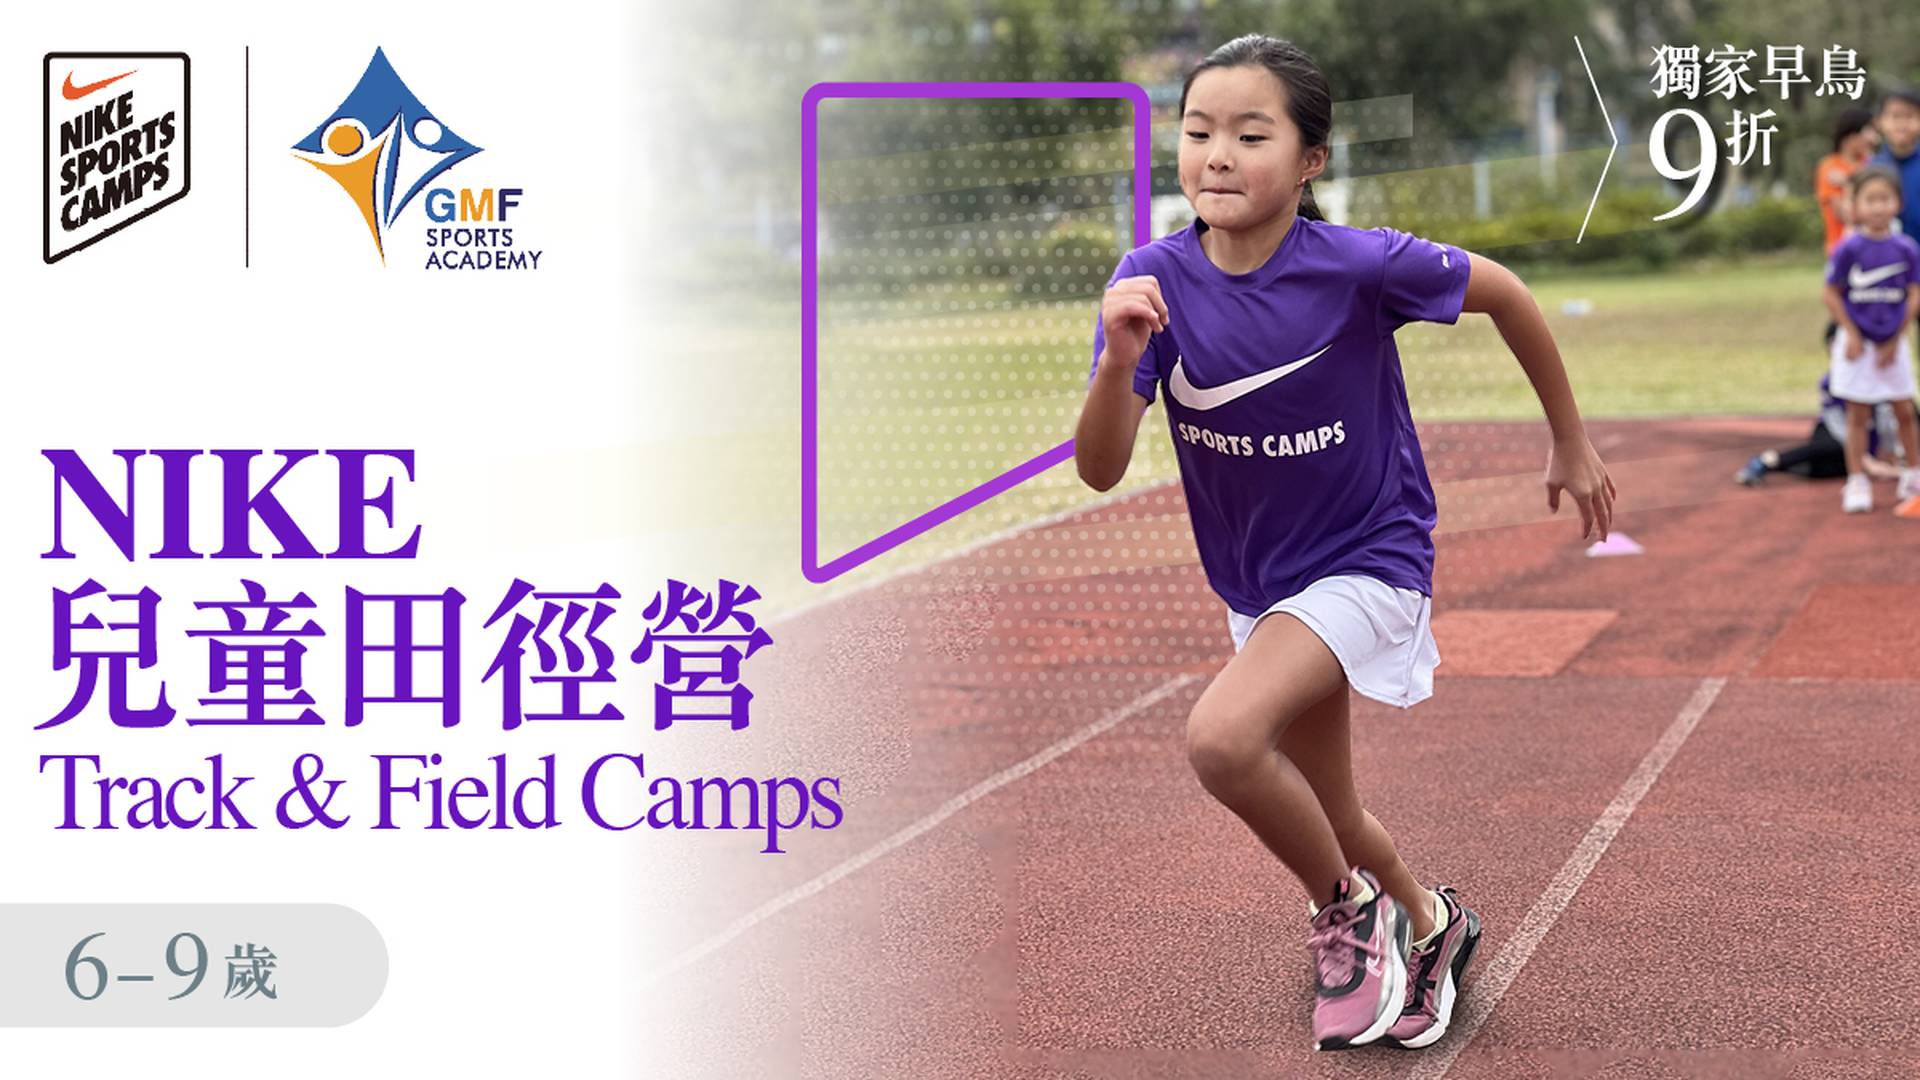 NIKE TRACK & FIELD CAMPS 田徑營 暑期兒童田徑訓練班 2023 ( 6 - 9歲 )